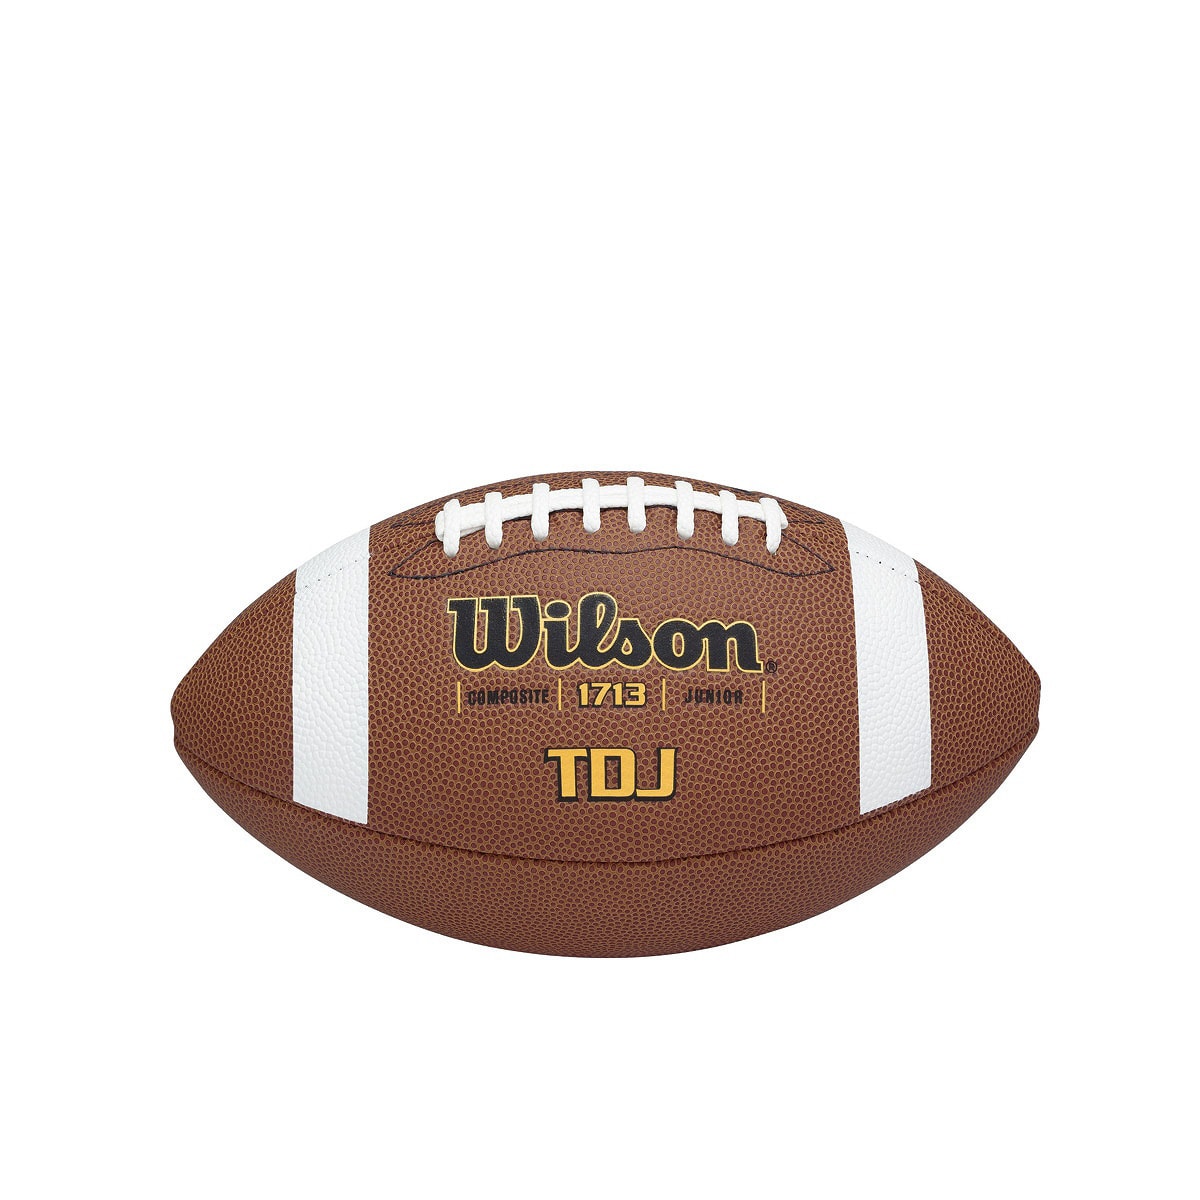 Wilson Td Junior Composite Football